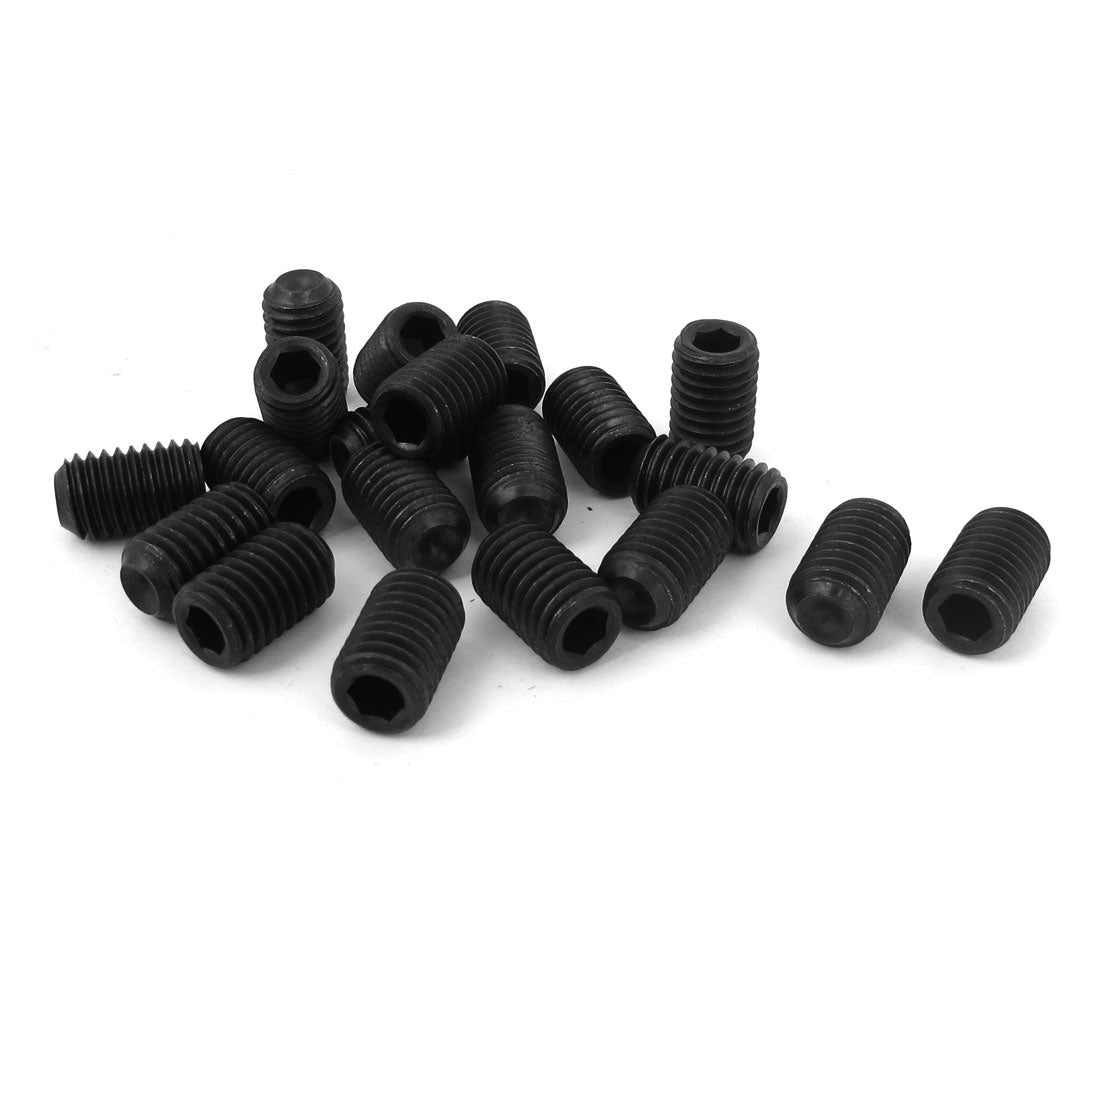 Uxcell Uxcell M8 x 10mm 1.25mm Pitch Hex Socket Set Cup Point Grub Screws Black 50pcs